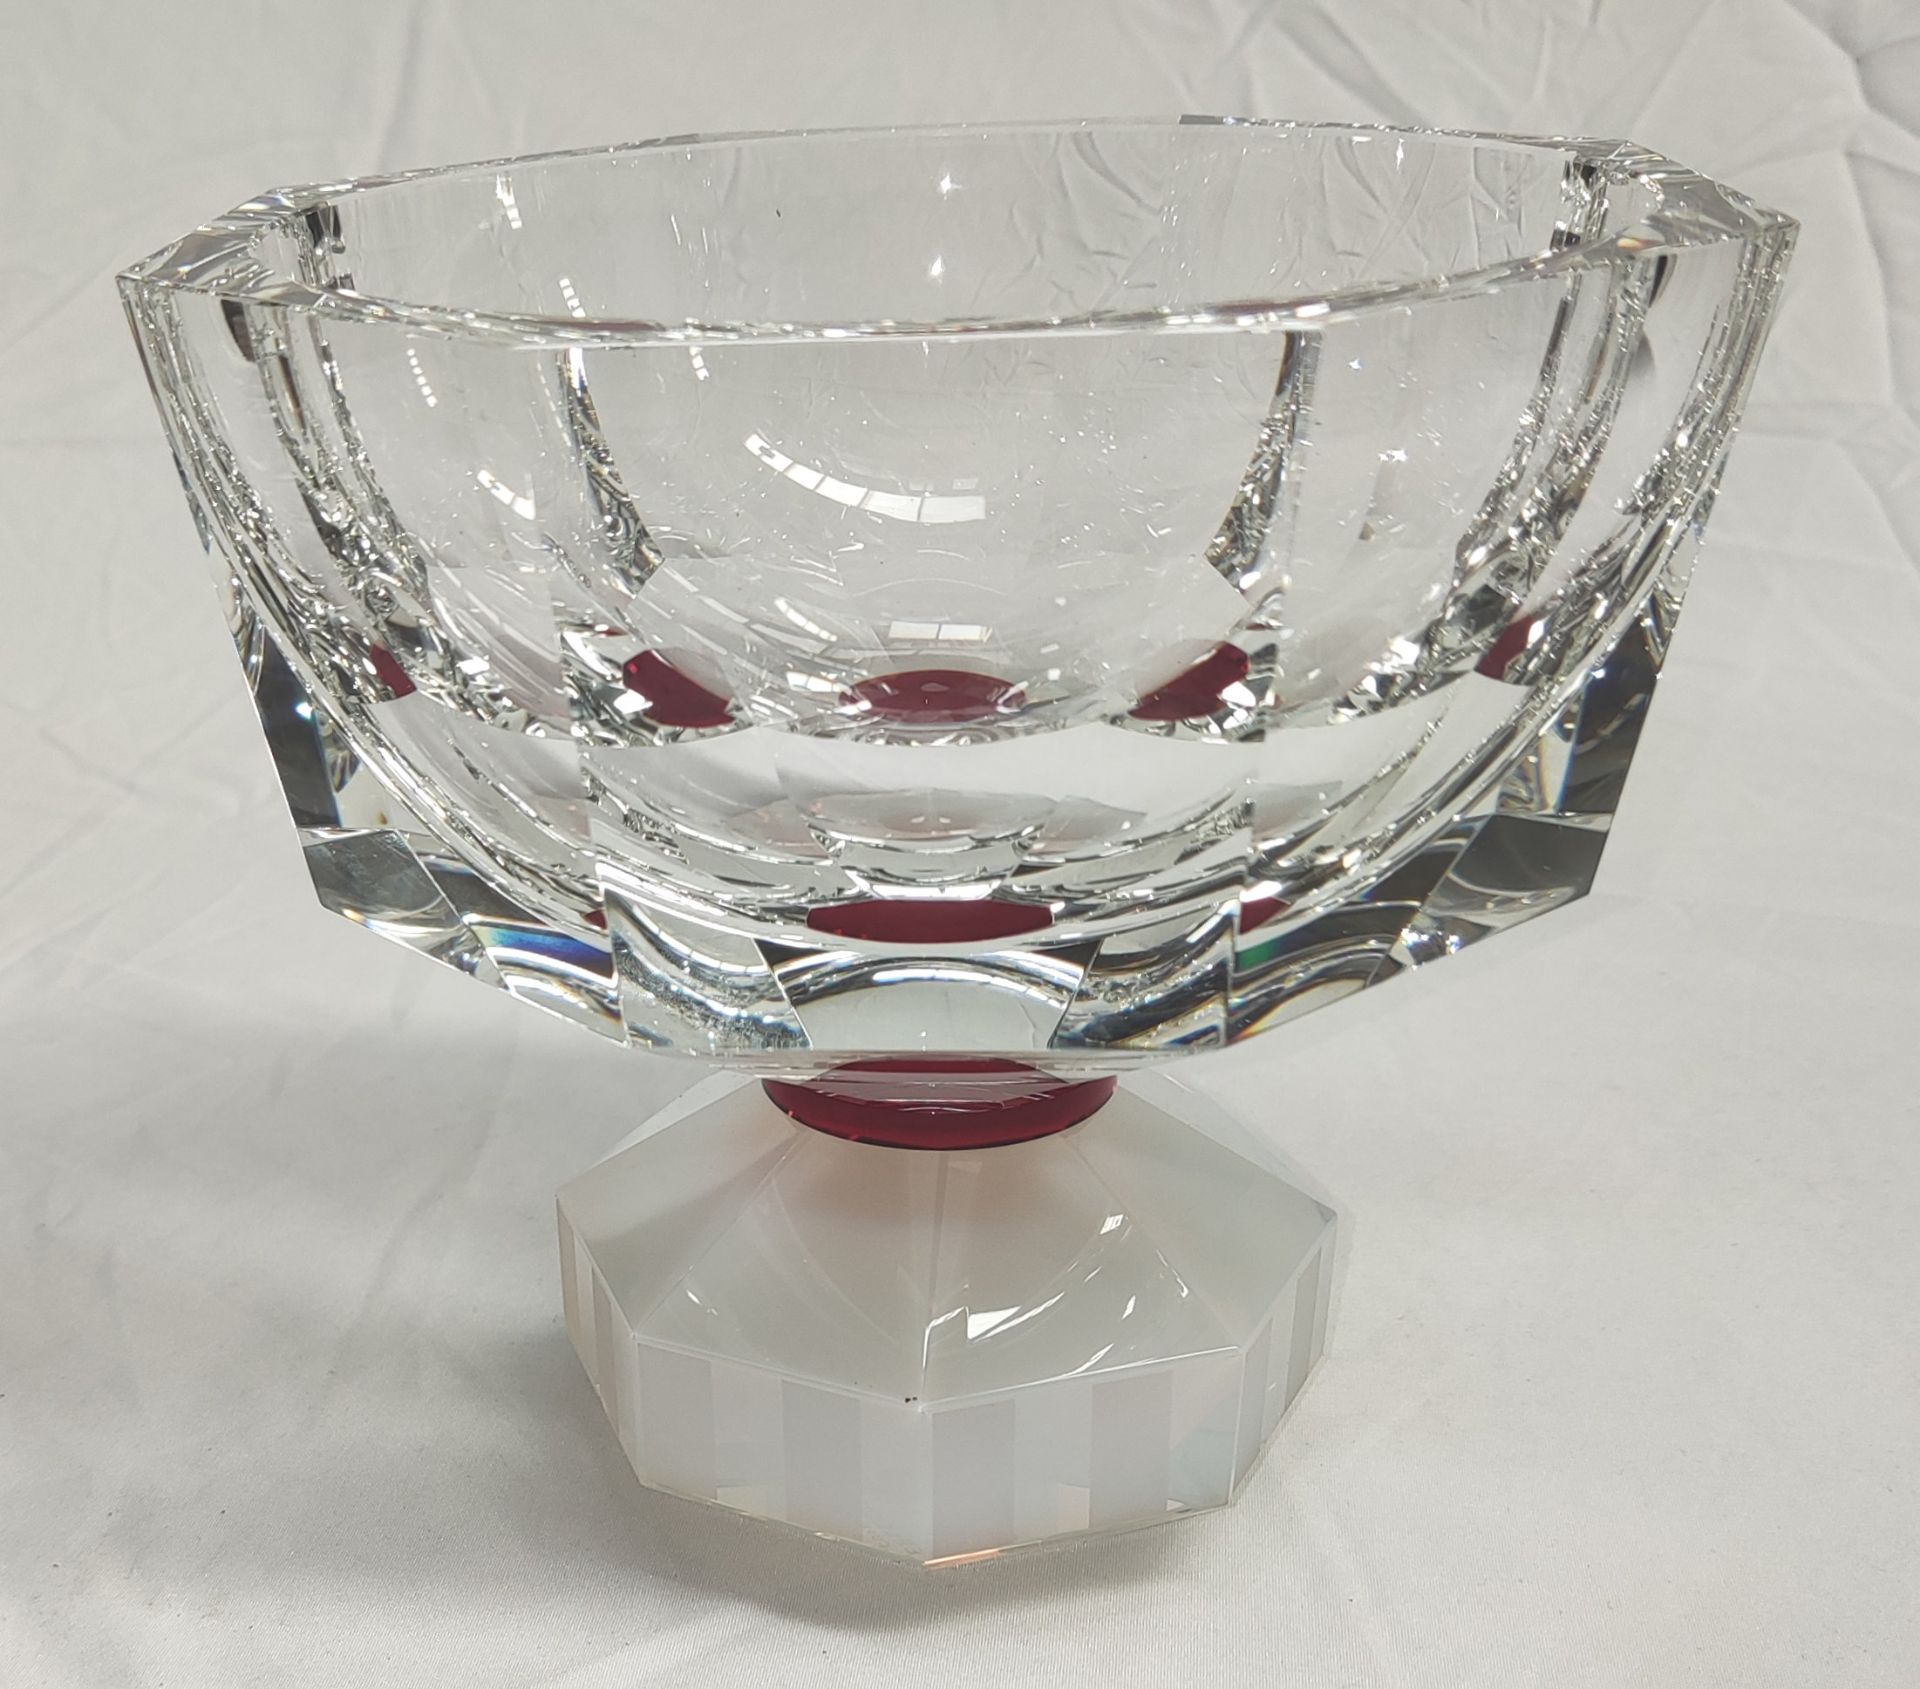 1 x REFLECTIONS COPENHAGEN Halifax Hand-Cut Crystal Glass Bowl In Clear/Milk/Plum - Original RRP £ - Image 7 of 21